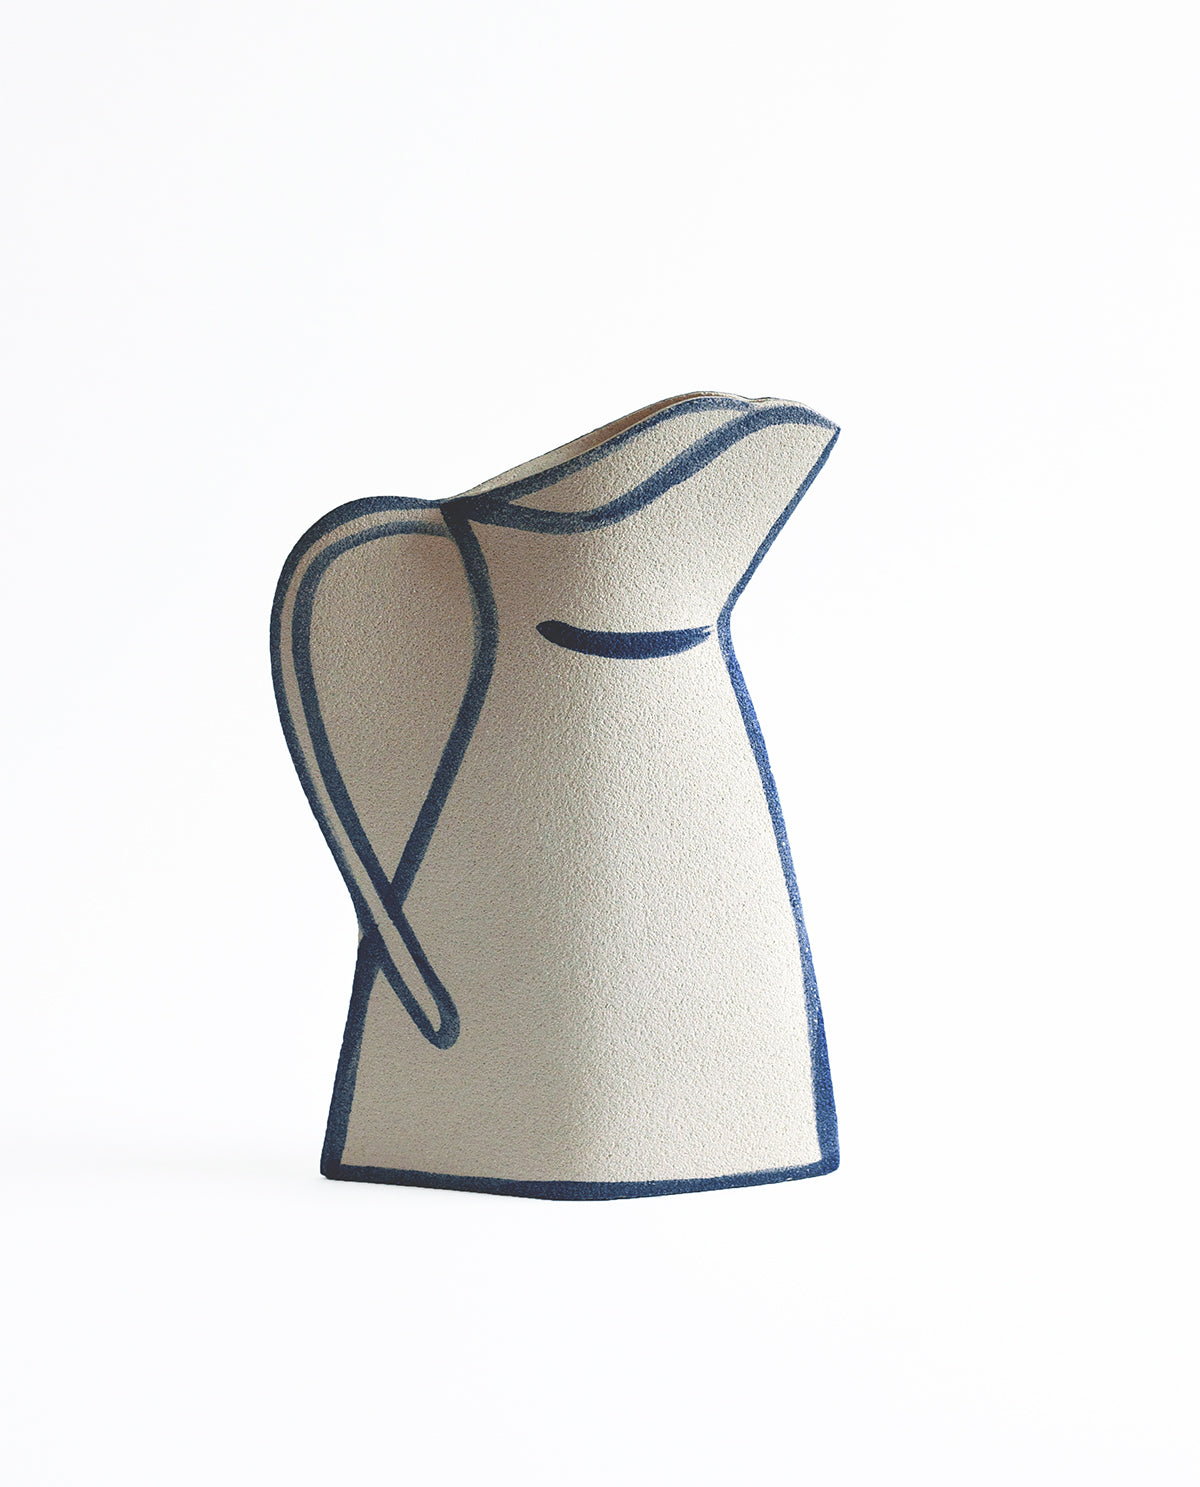 Vase En Céramique ‘Morandi Pitcher - Blue’